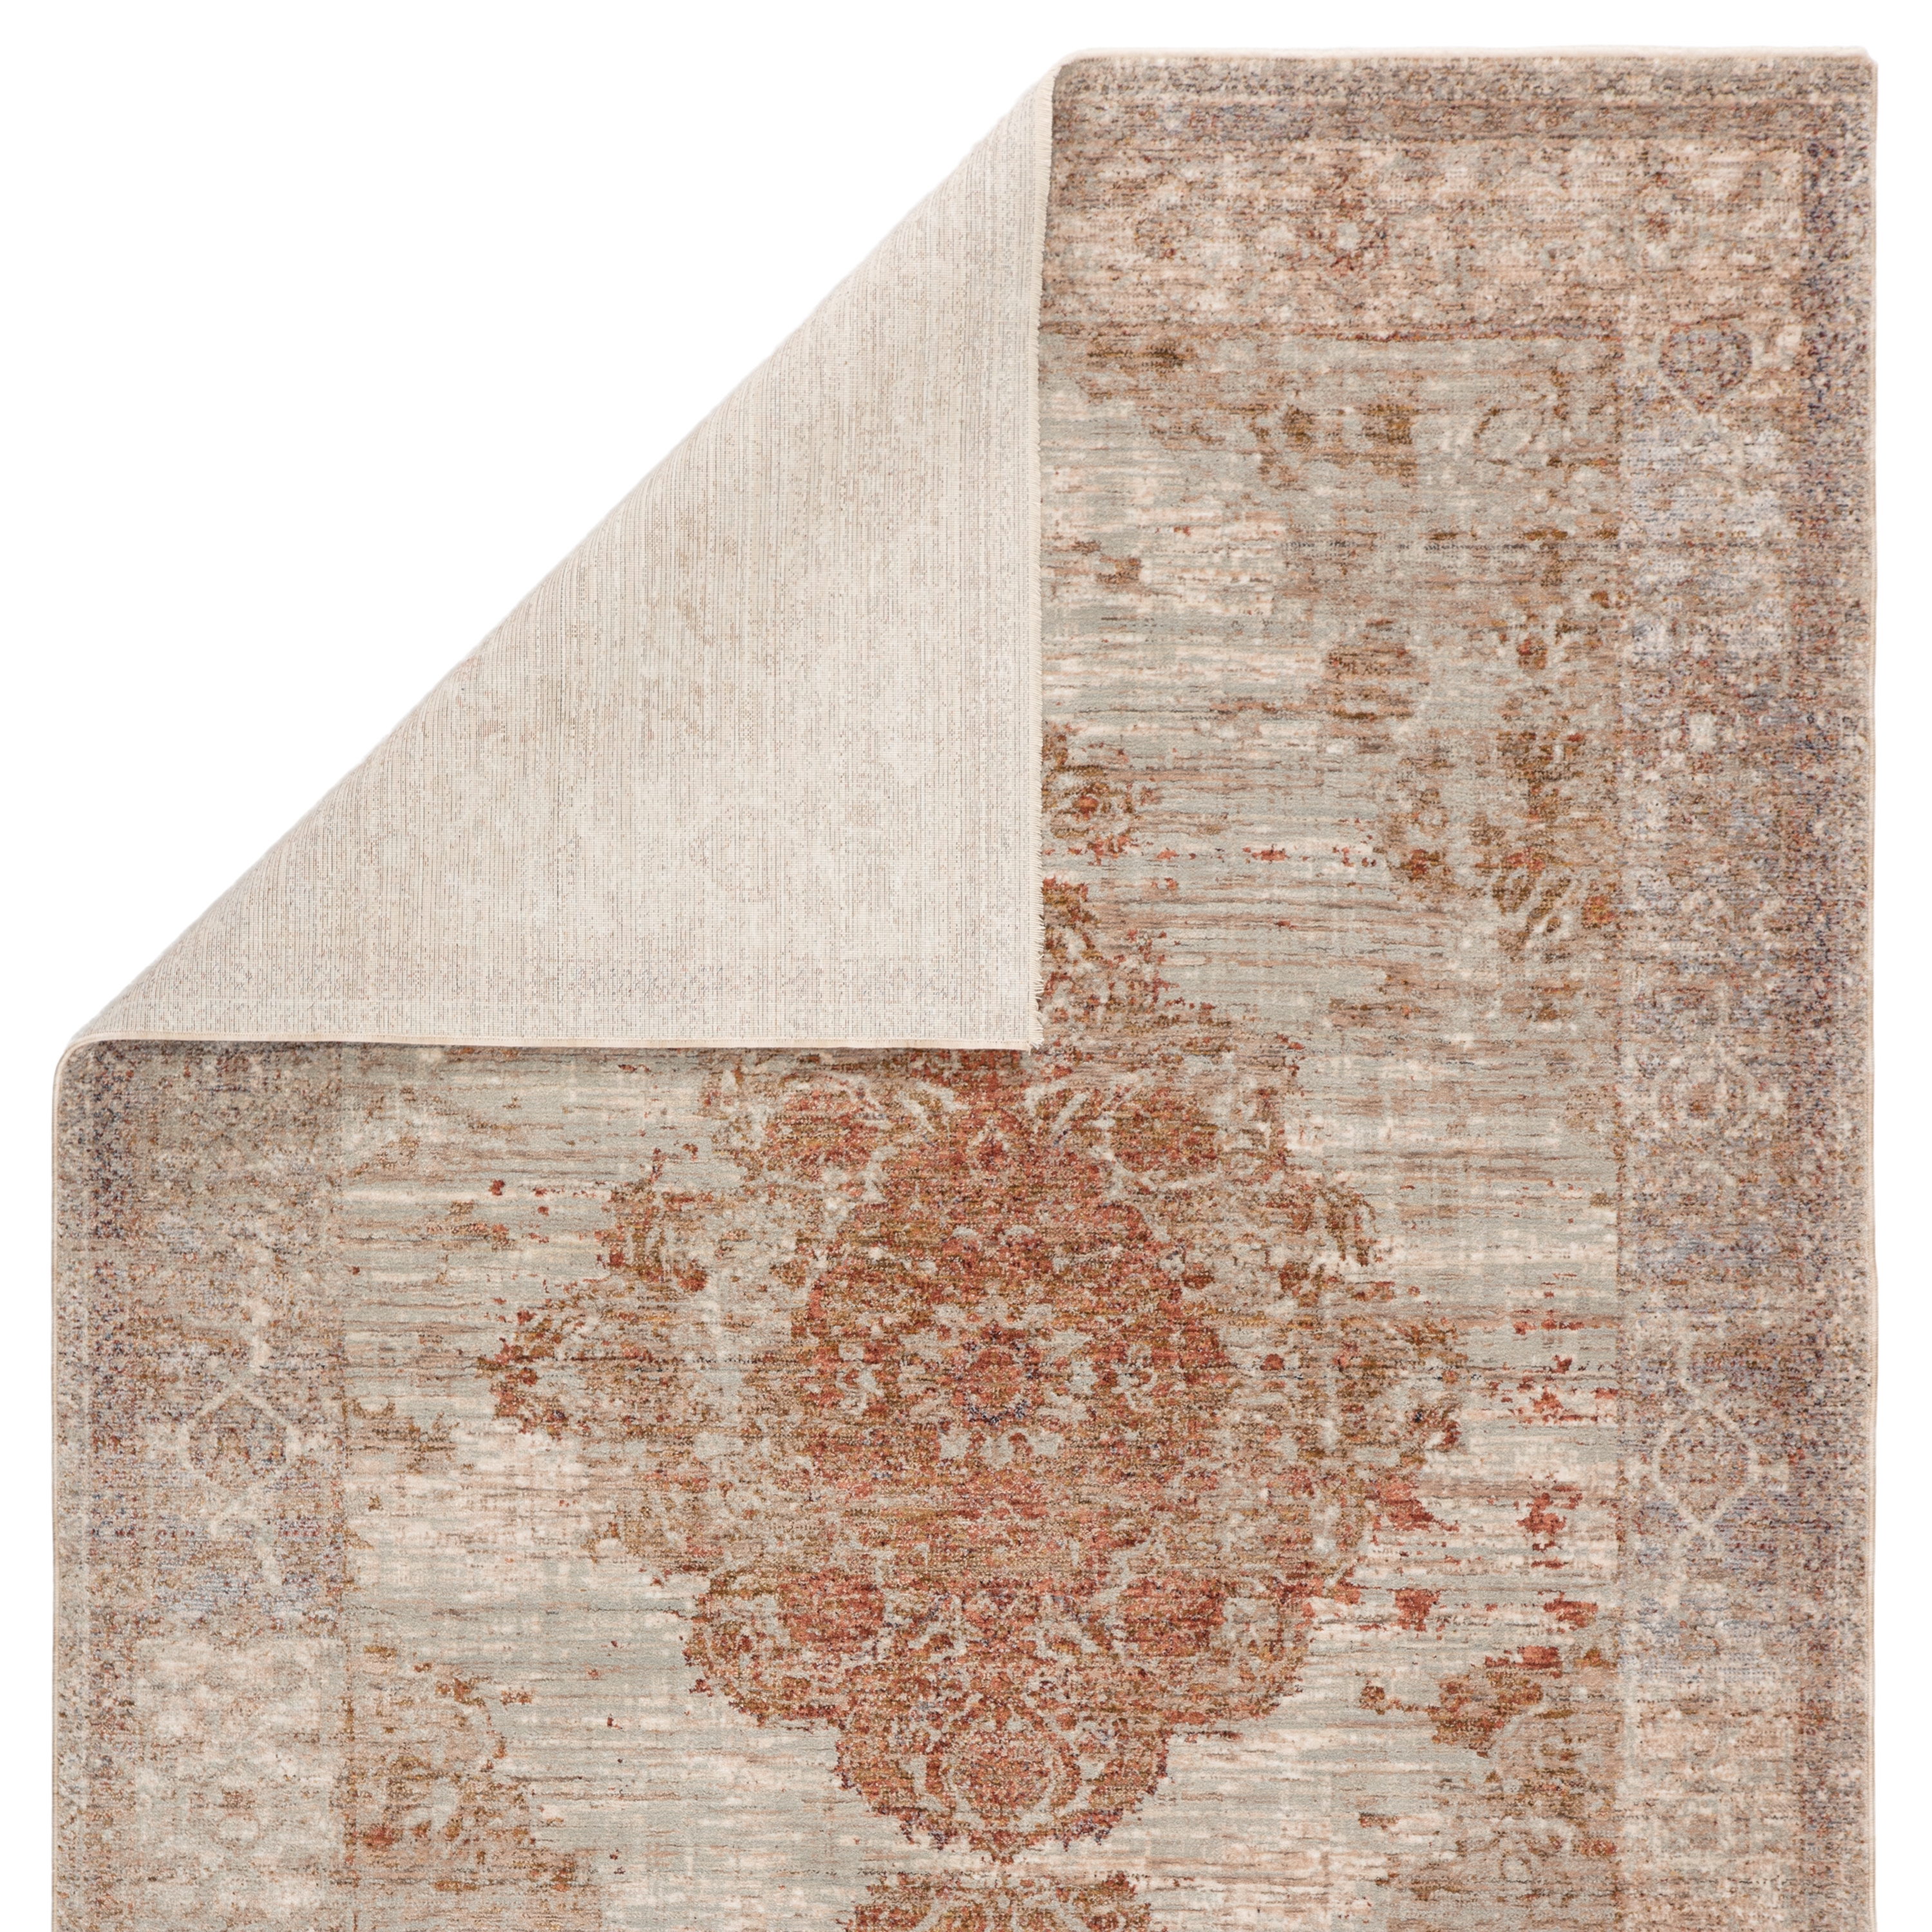 Beatty Medallion Area Rug, Tan & Rust, 8' x 10' - Image 2